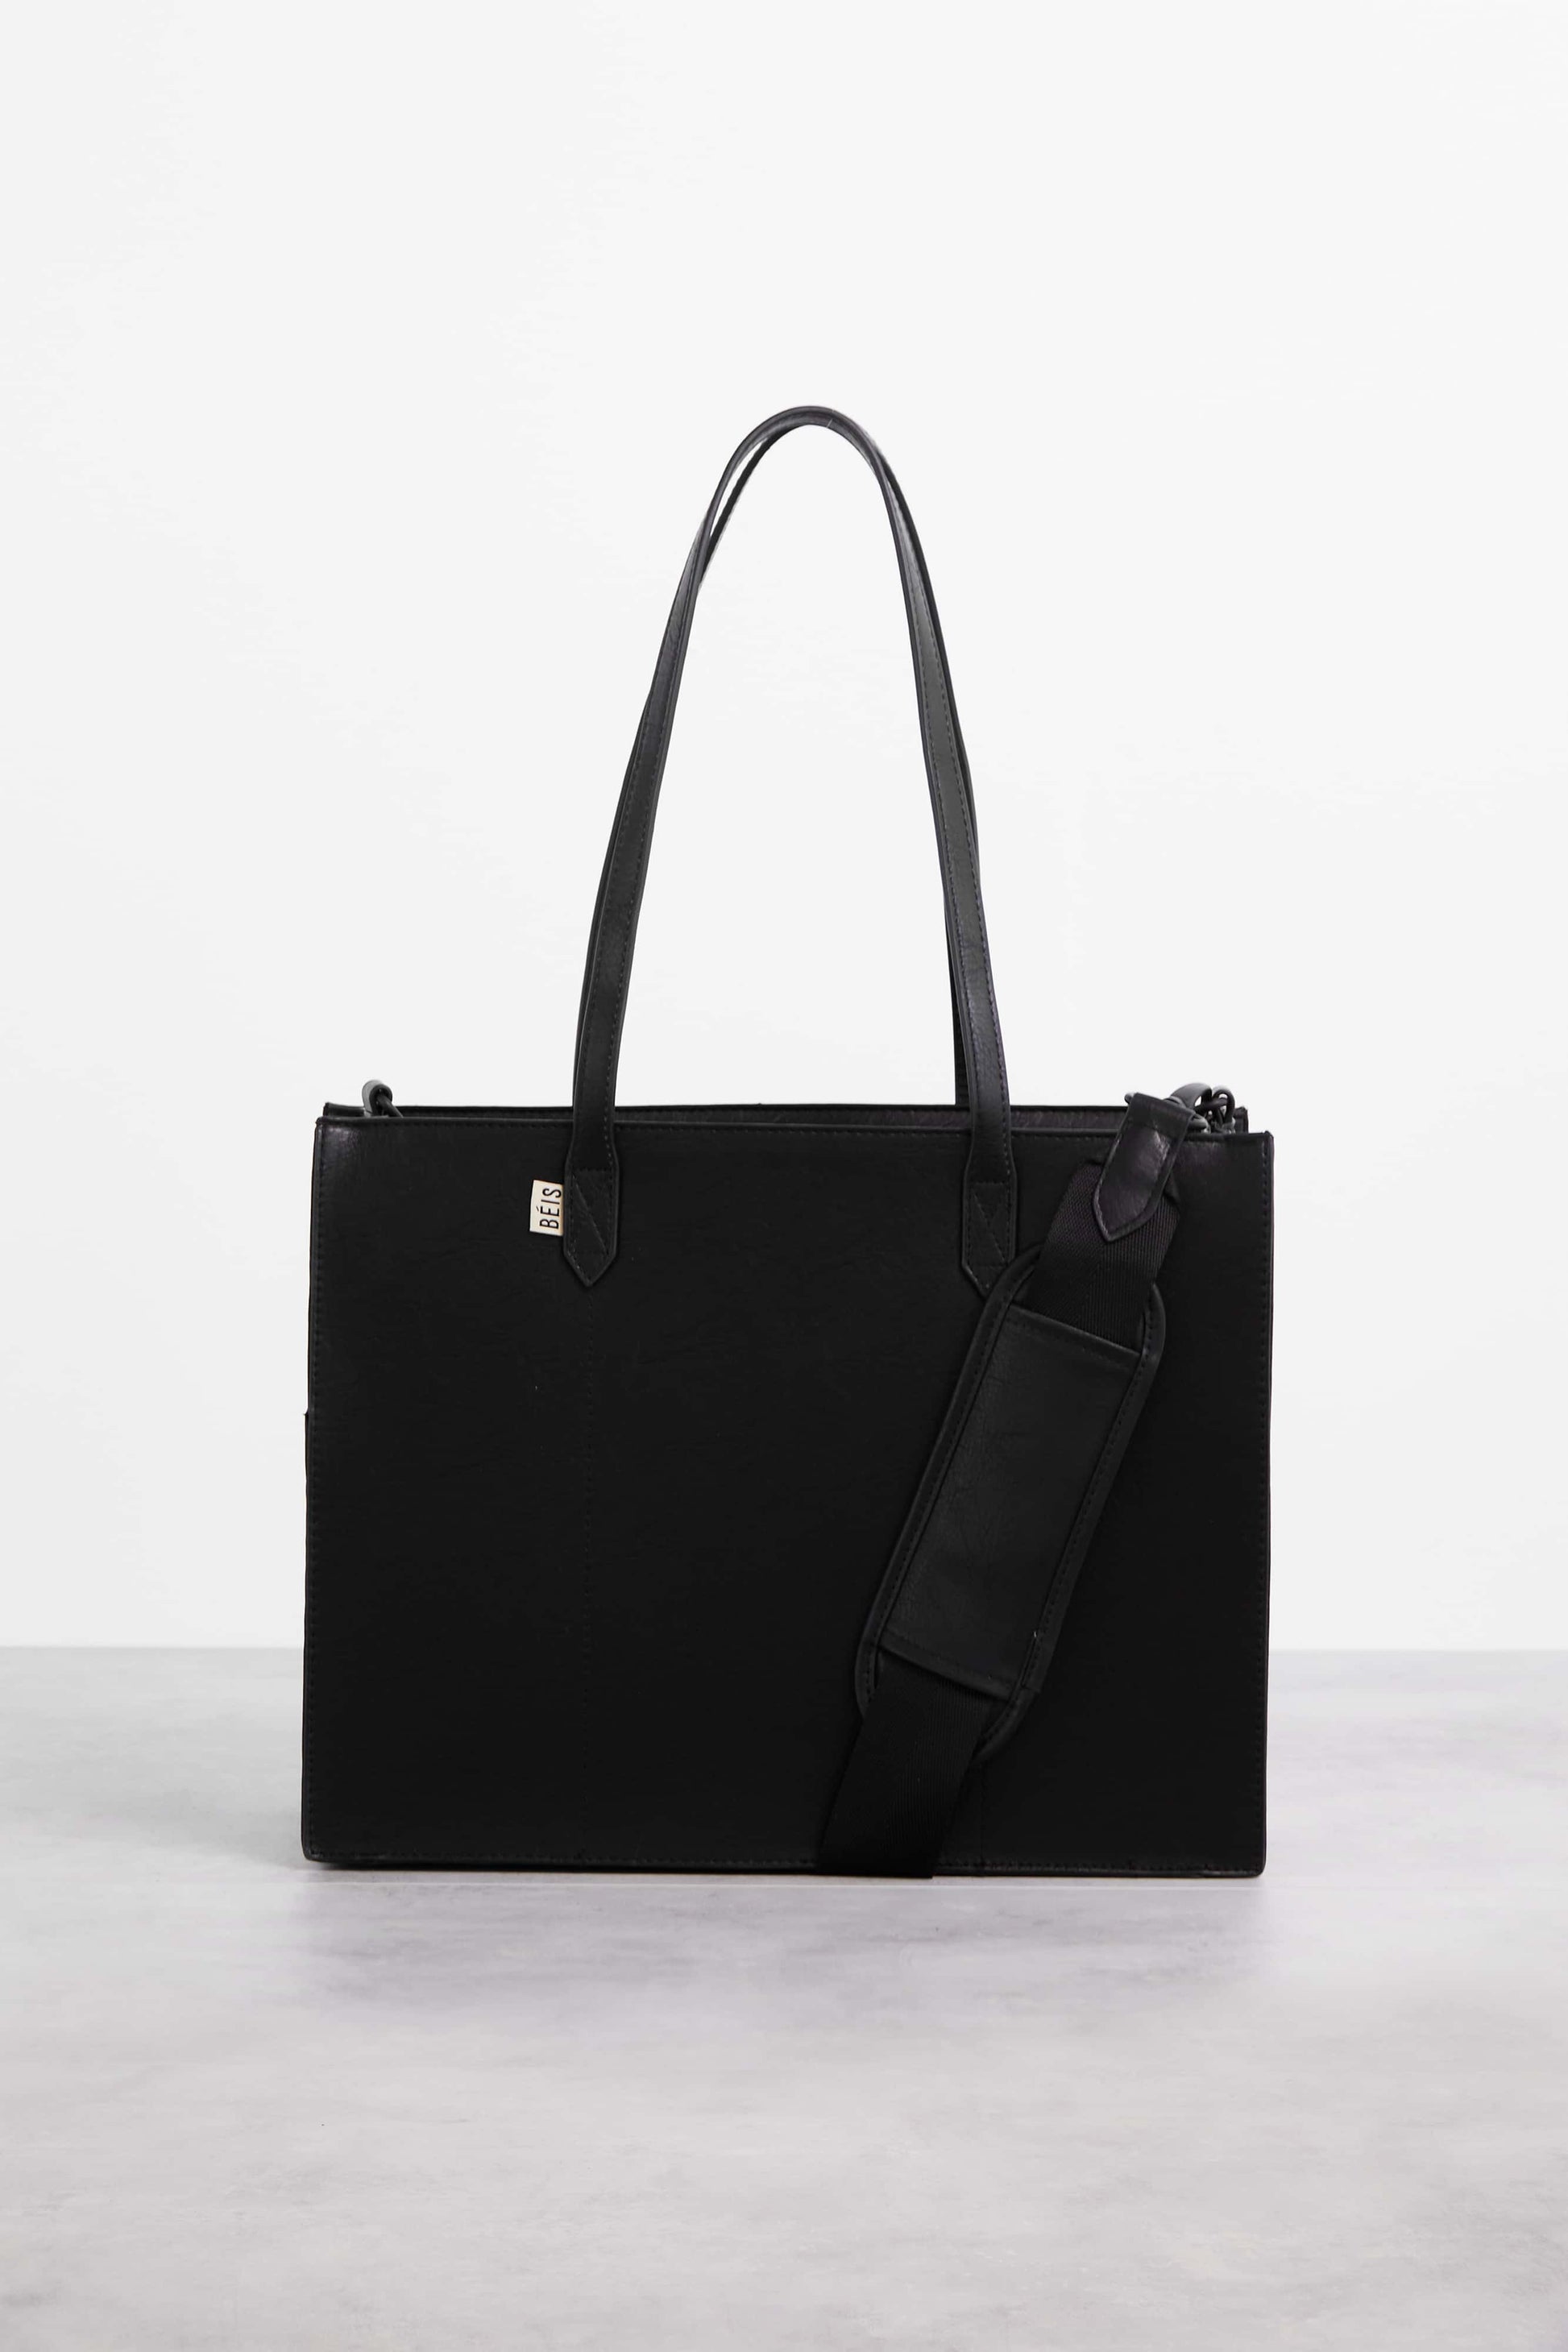 N.full Zipper Top Style Felt Bag and Purse Organizer / Bag -  Canada